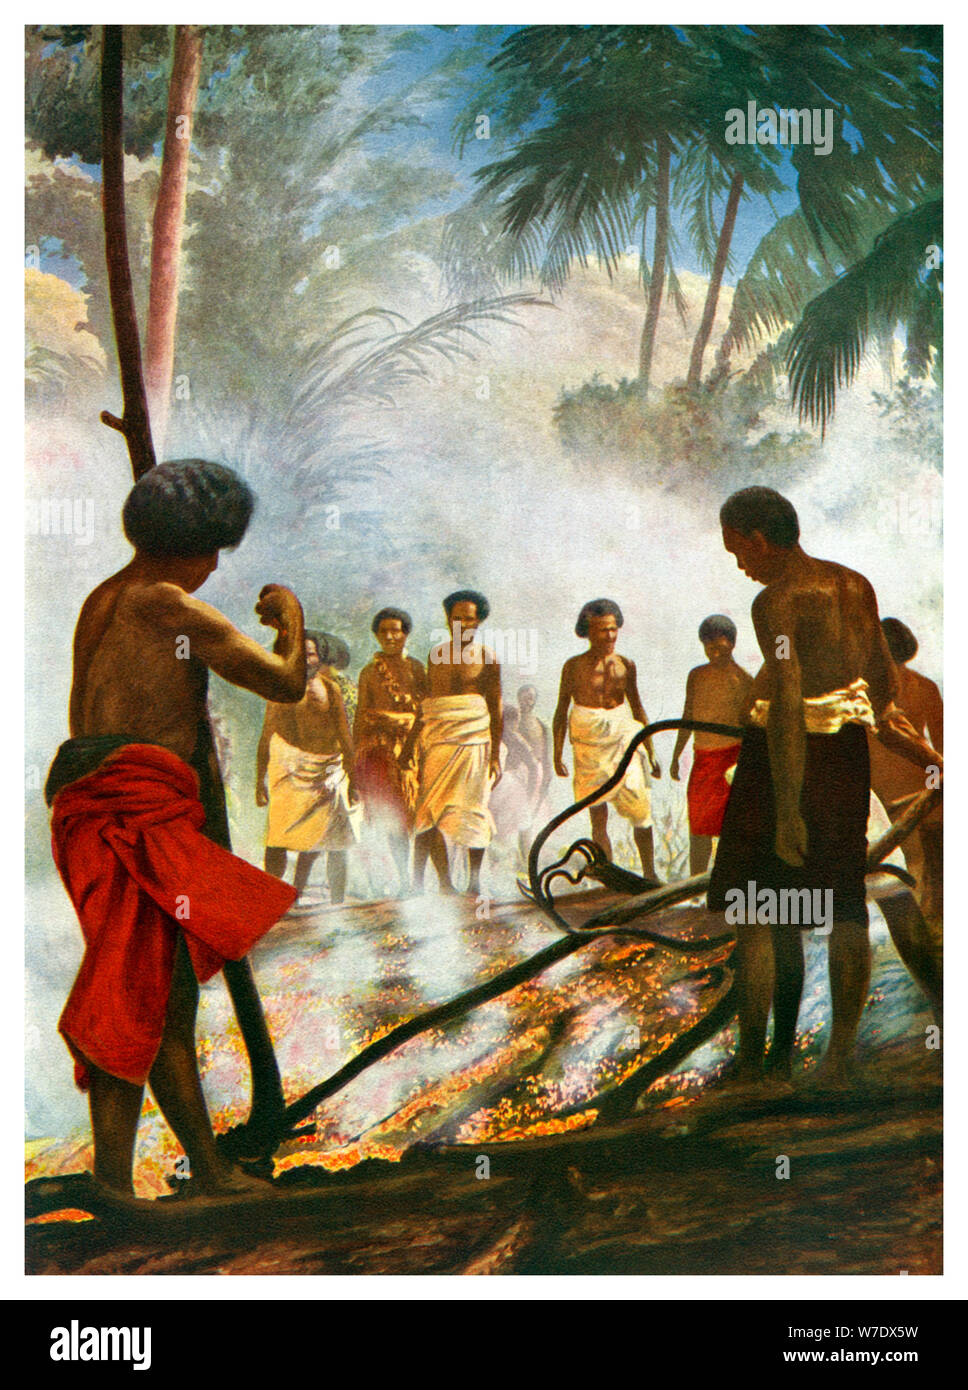 Fire caminando en Fiji, 1920. Artista: Desconocido Foto de stock